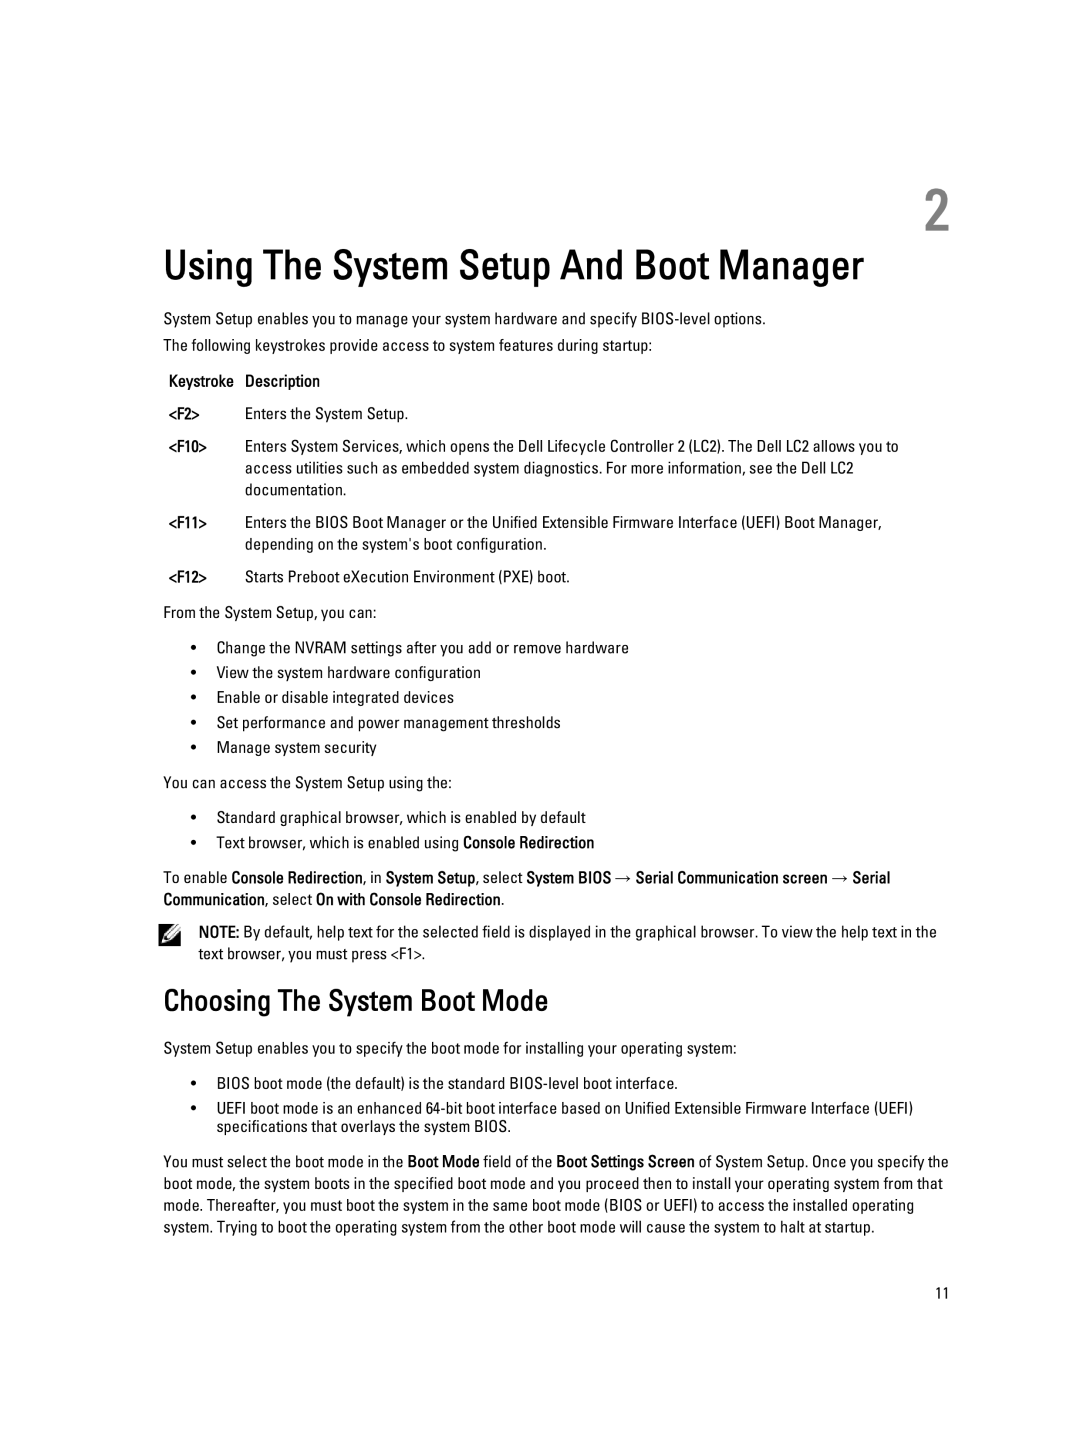 Dell M620 owner manual Choosing The System Boot Mode, Keystroke Description 